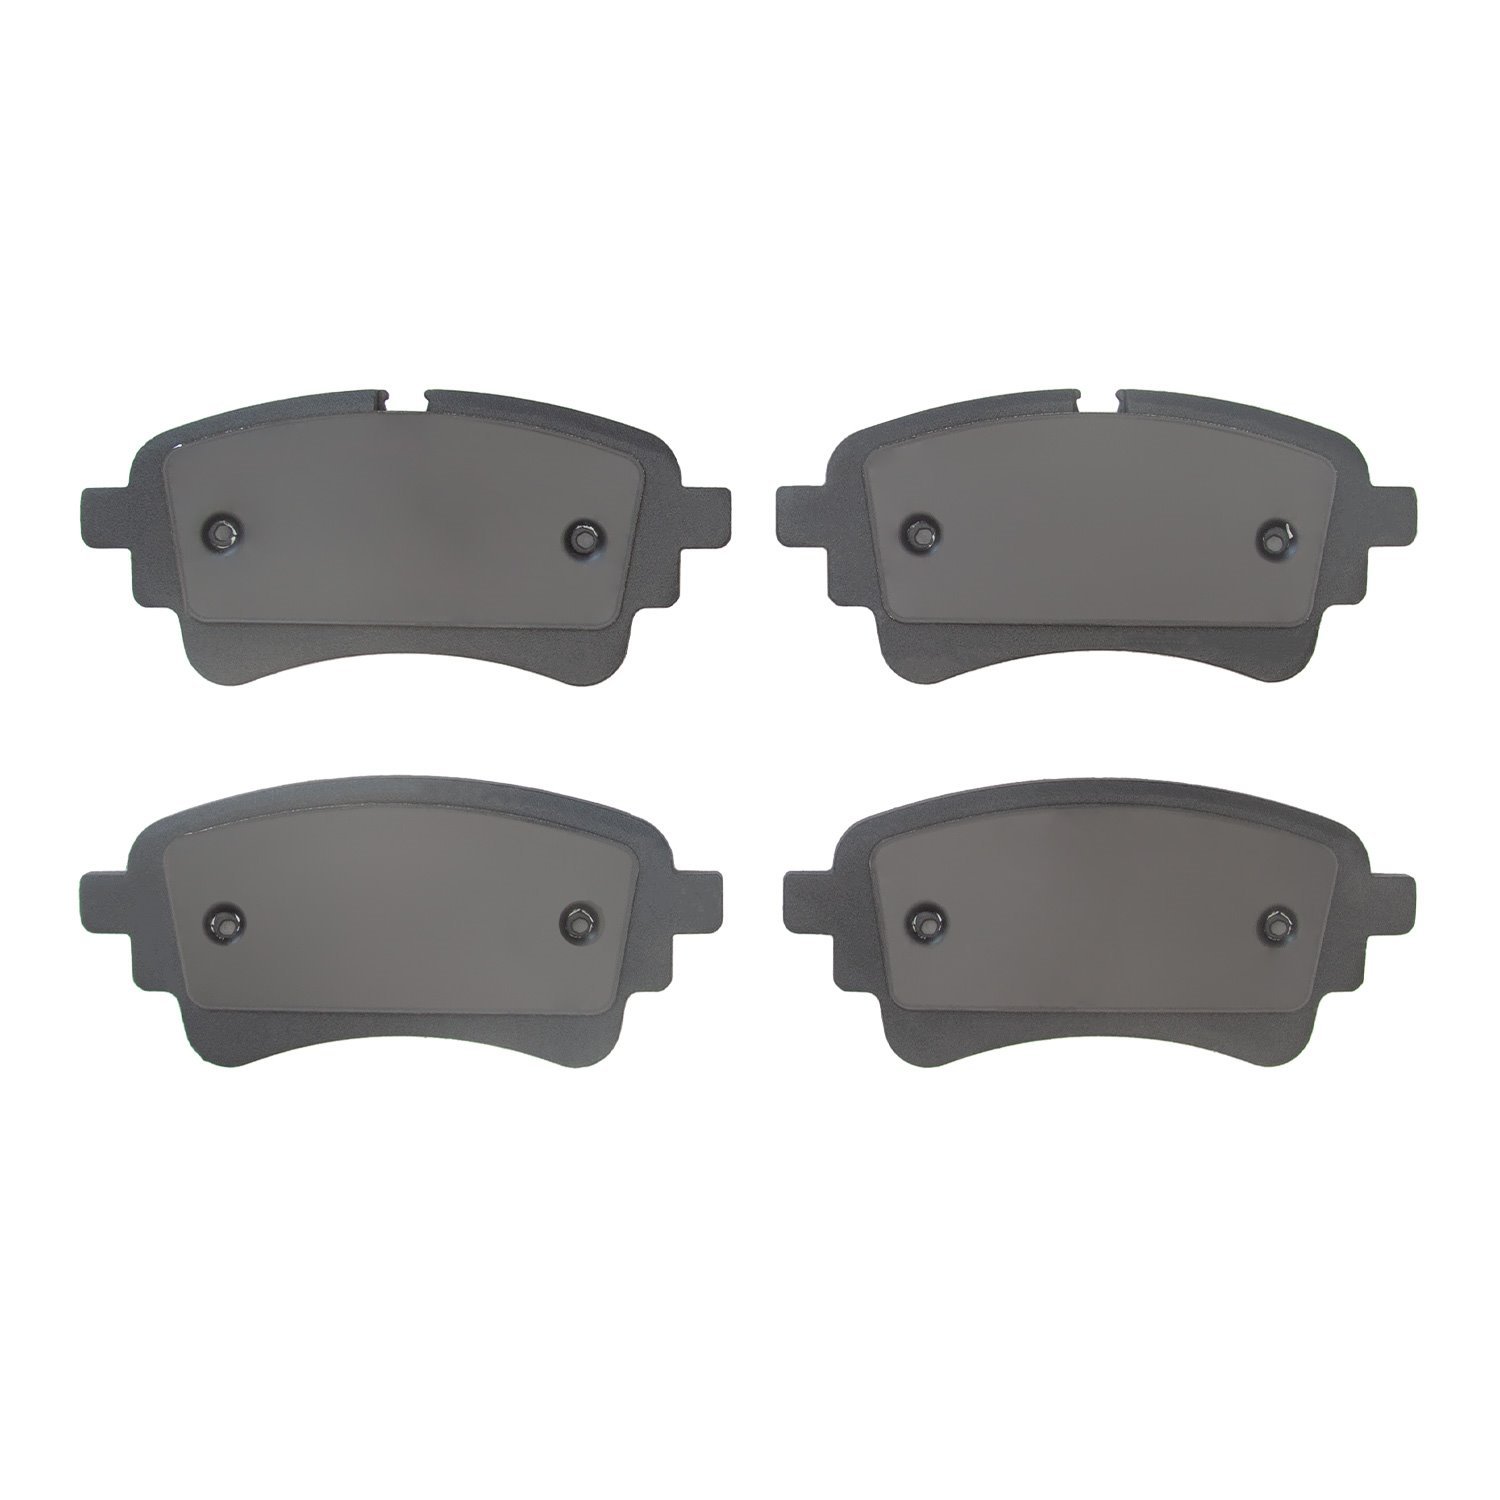 1310-2364-00 3000-Series Ceramic Brake Pads, Fits Select Audi/Volkswagen, Position: Rear